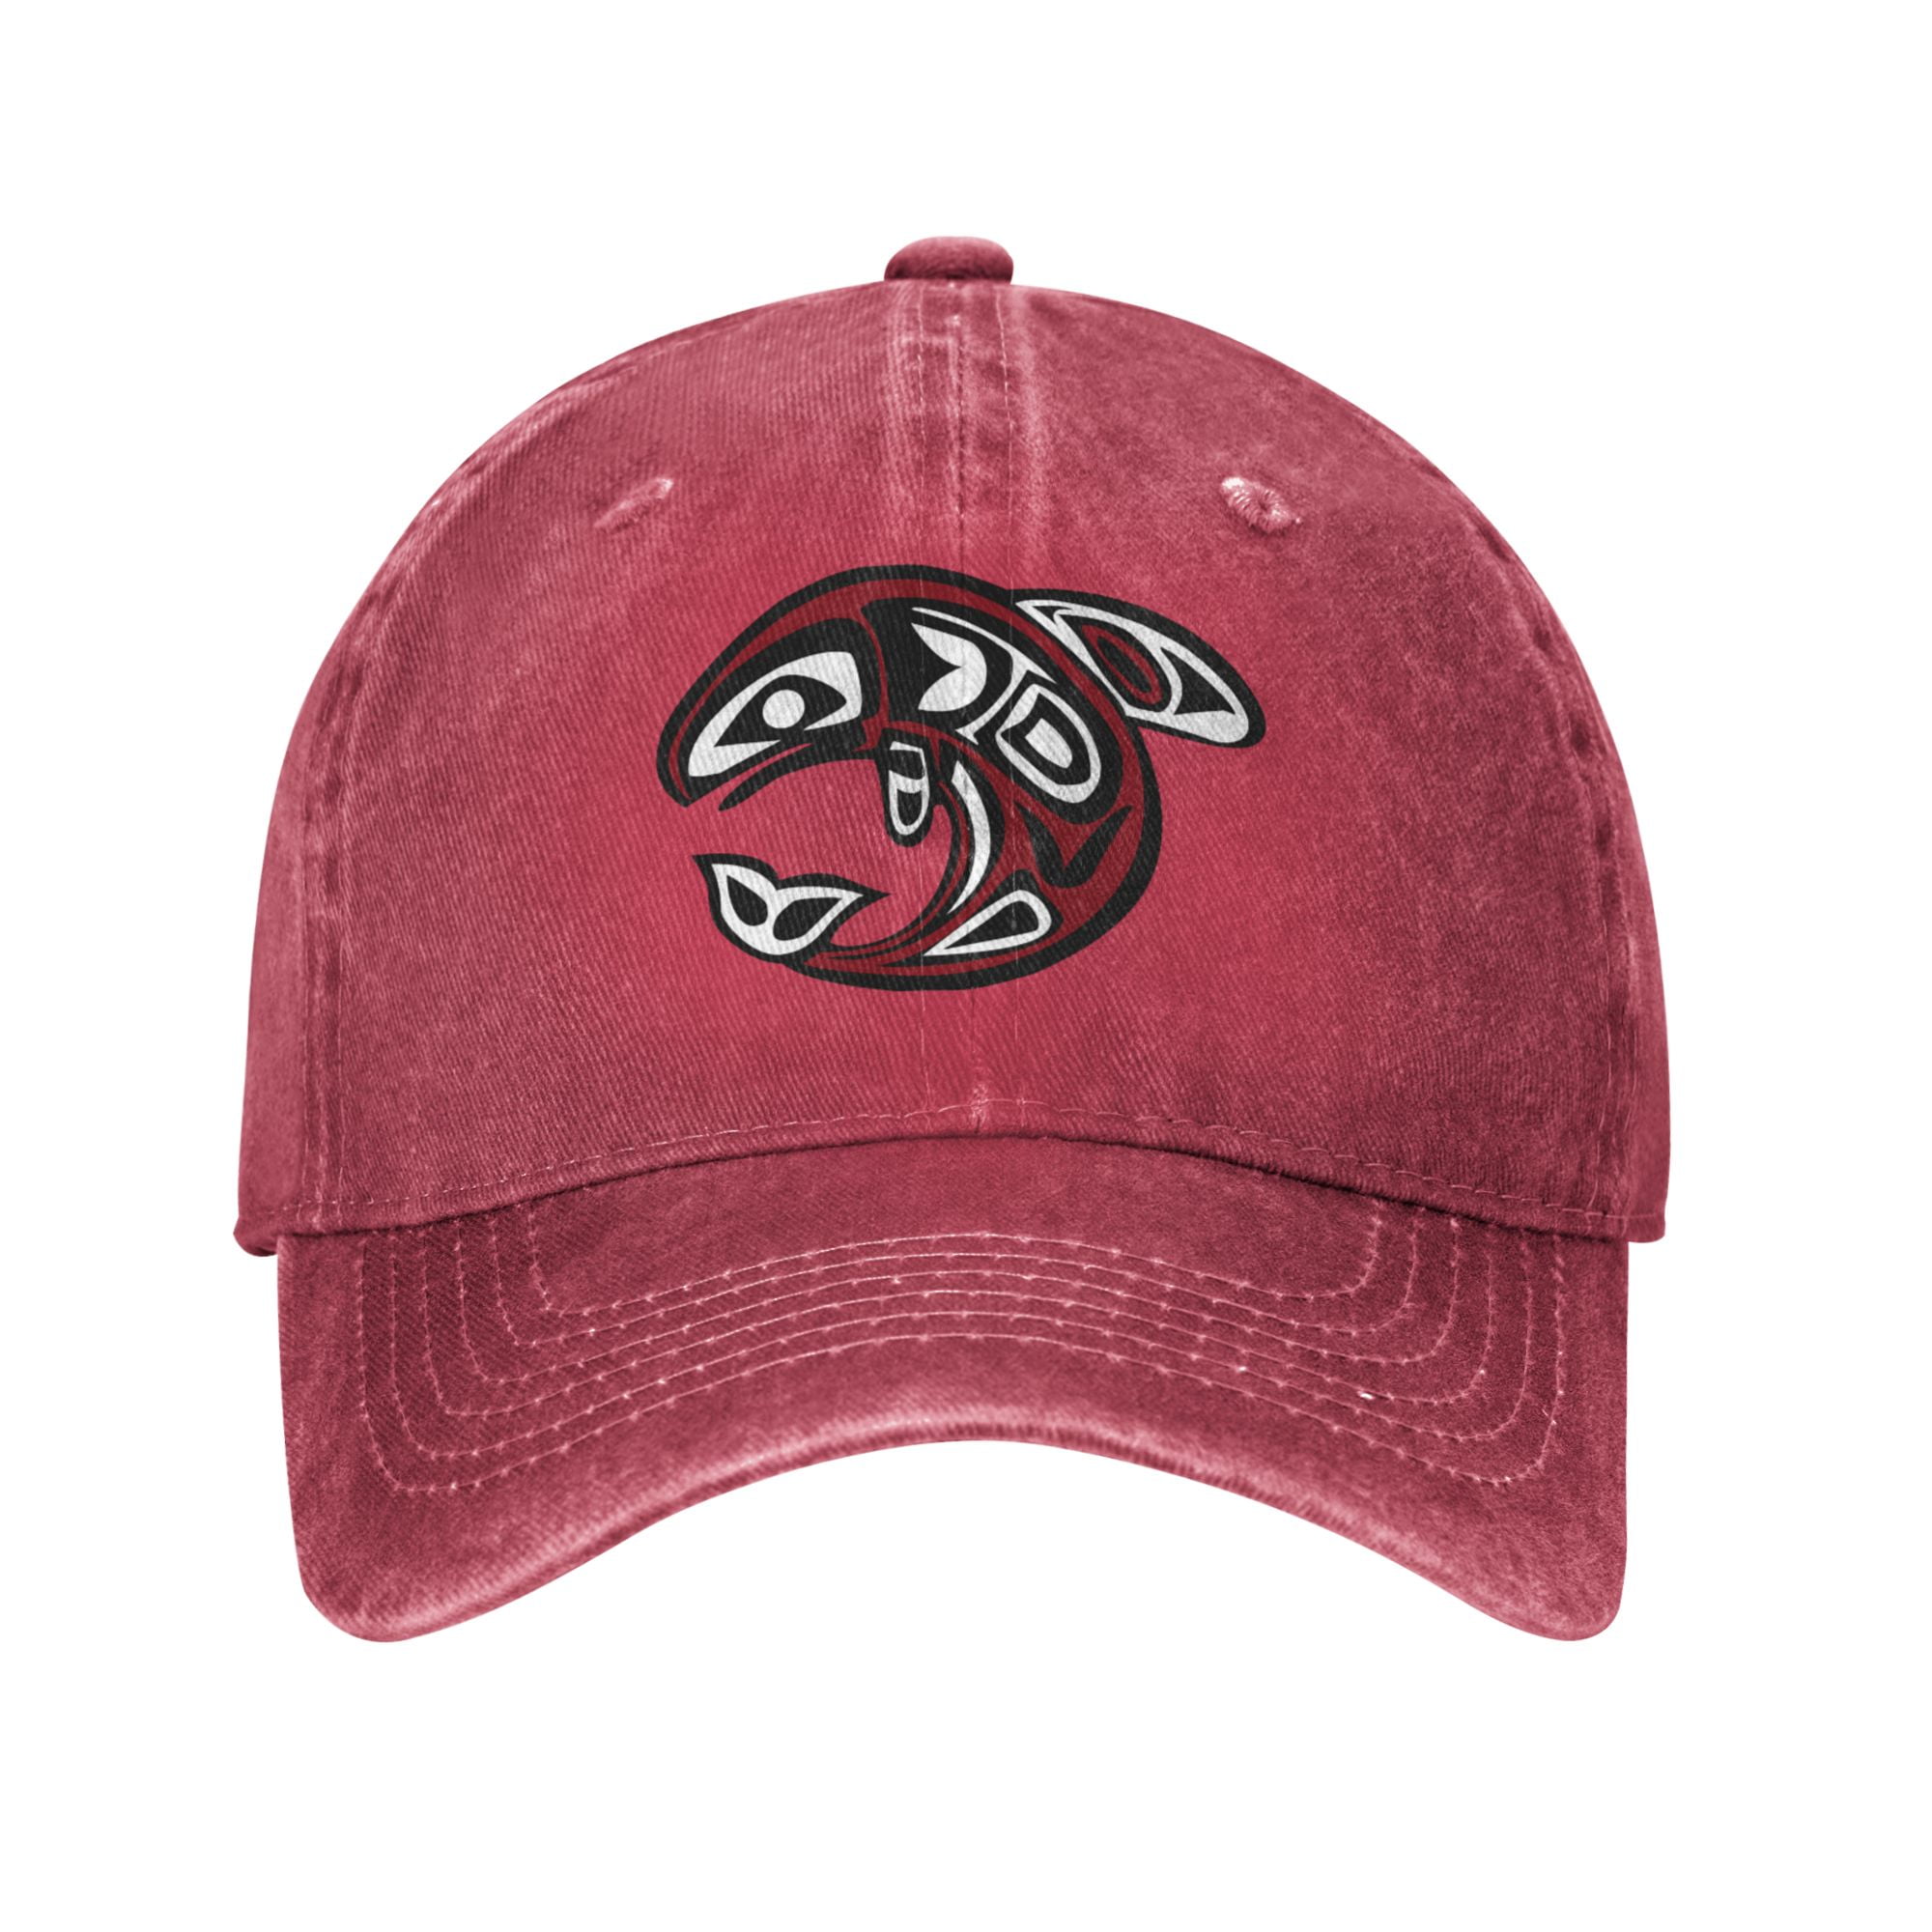 vintage fish cap - 帽子